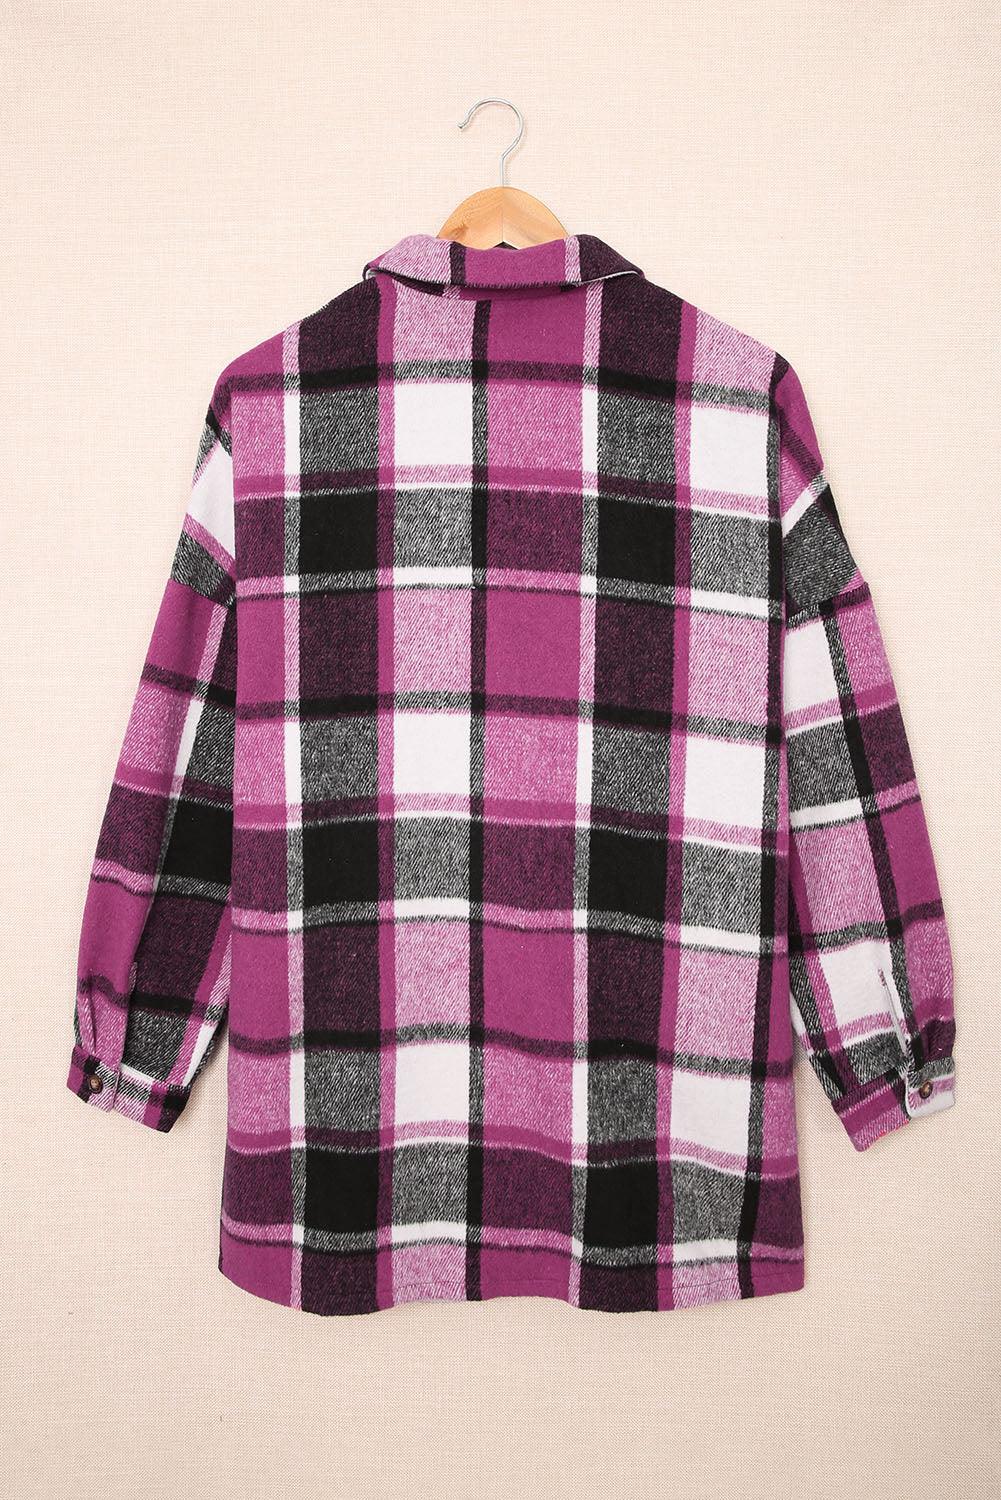 Rose Plaid Print Buttoned Shirt Jacket - L & M Kee, LLC